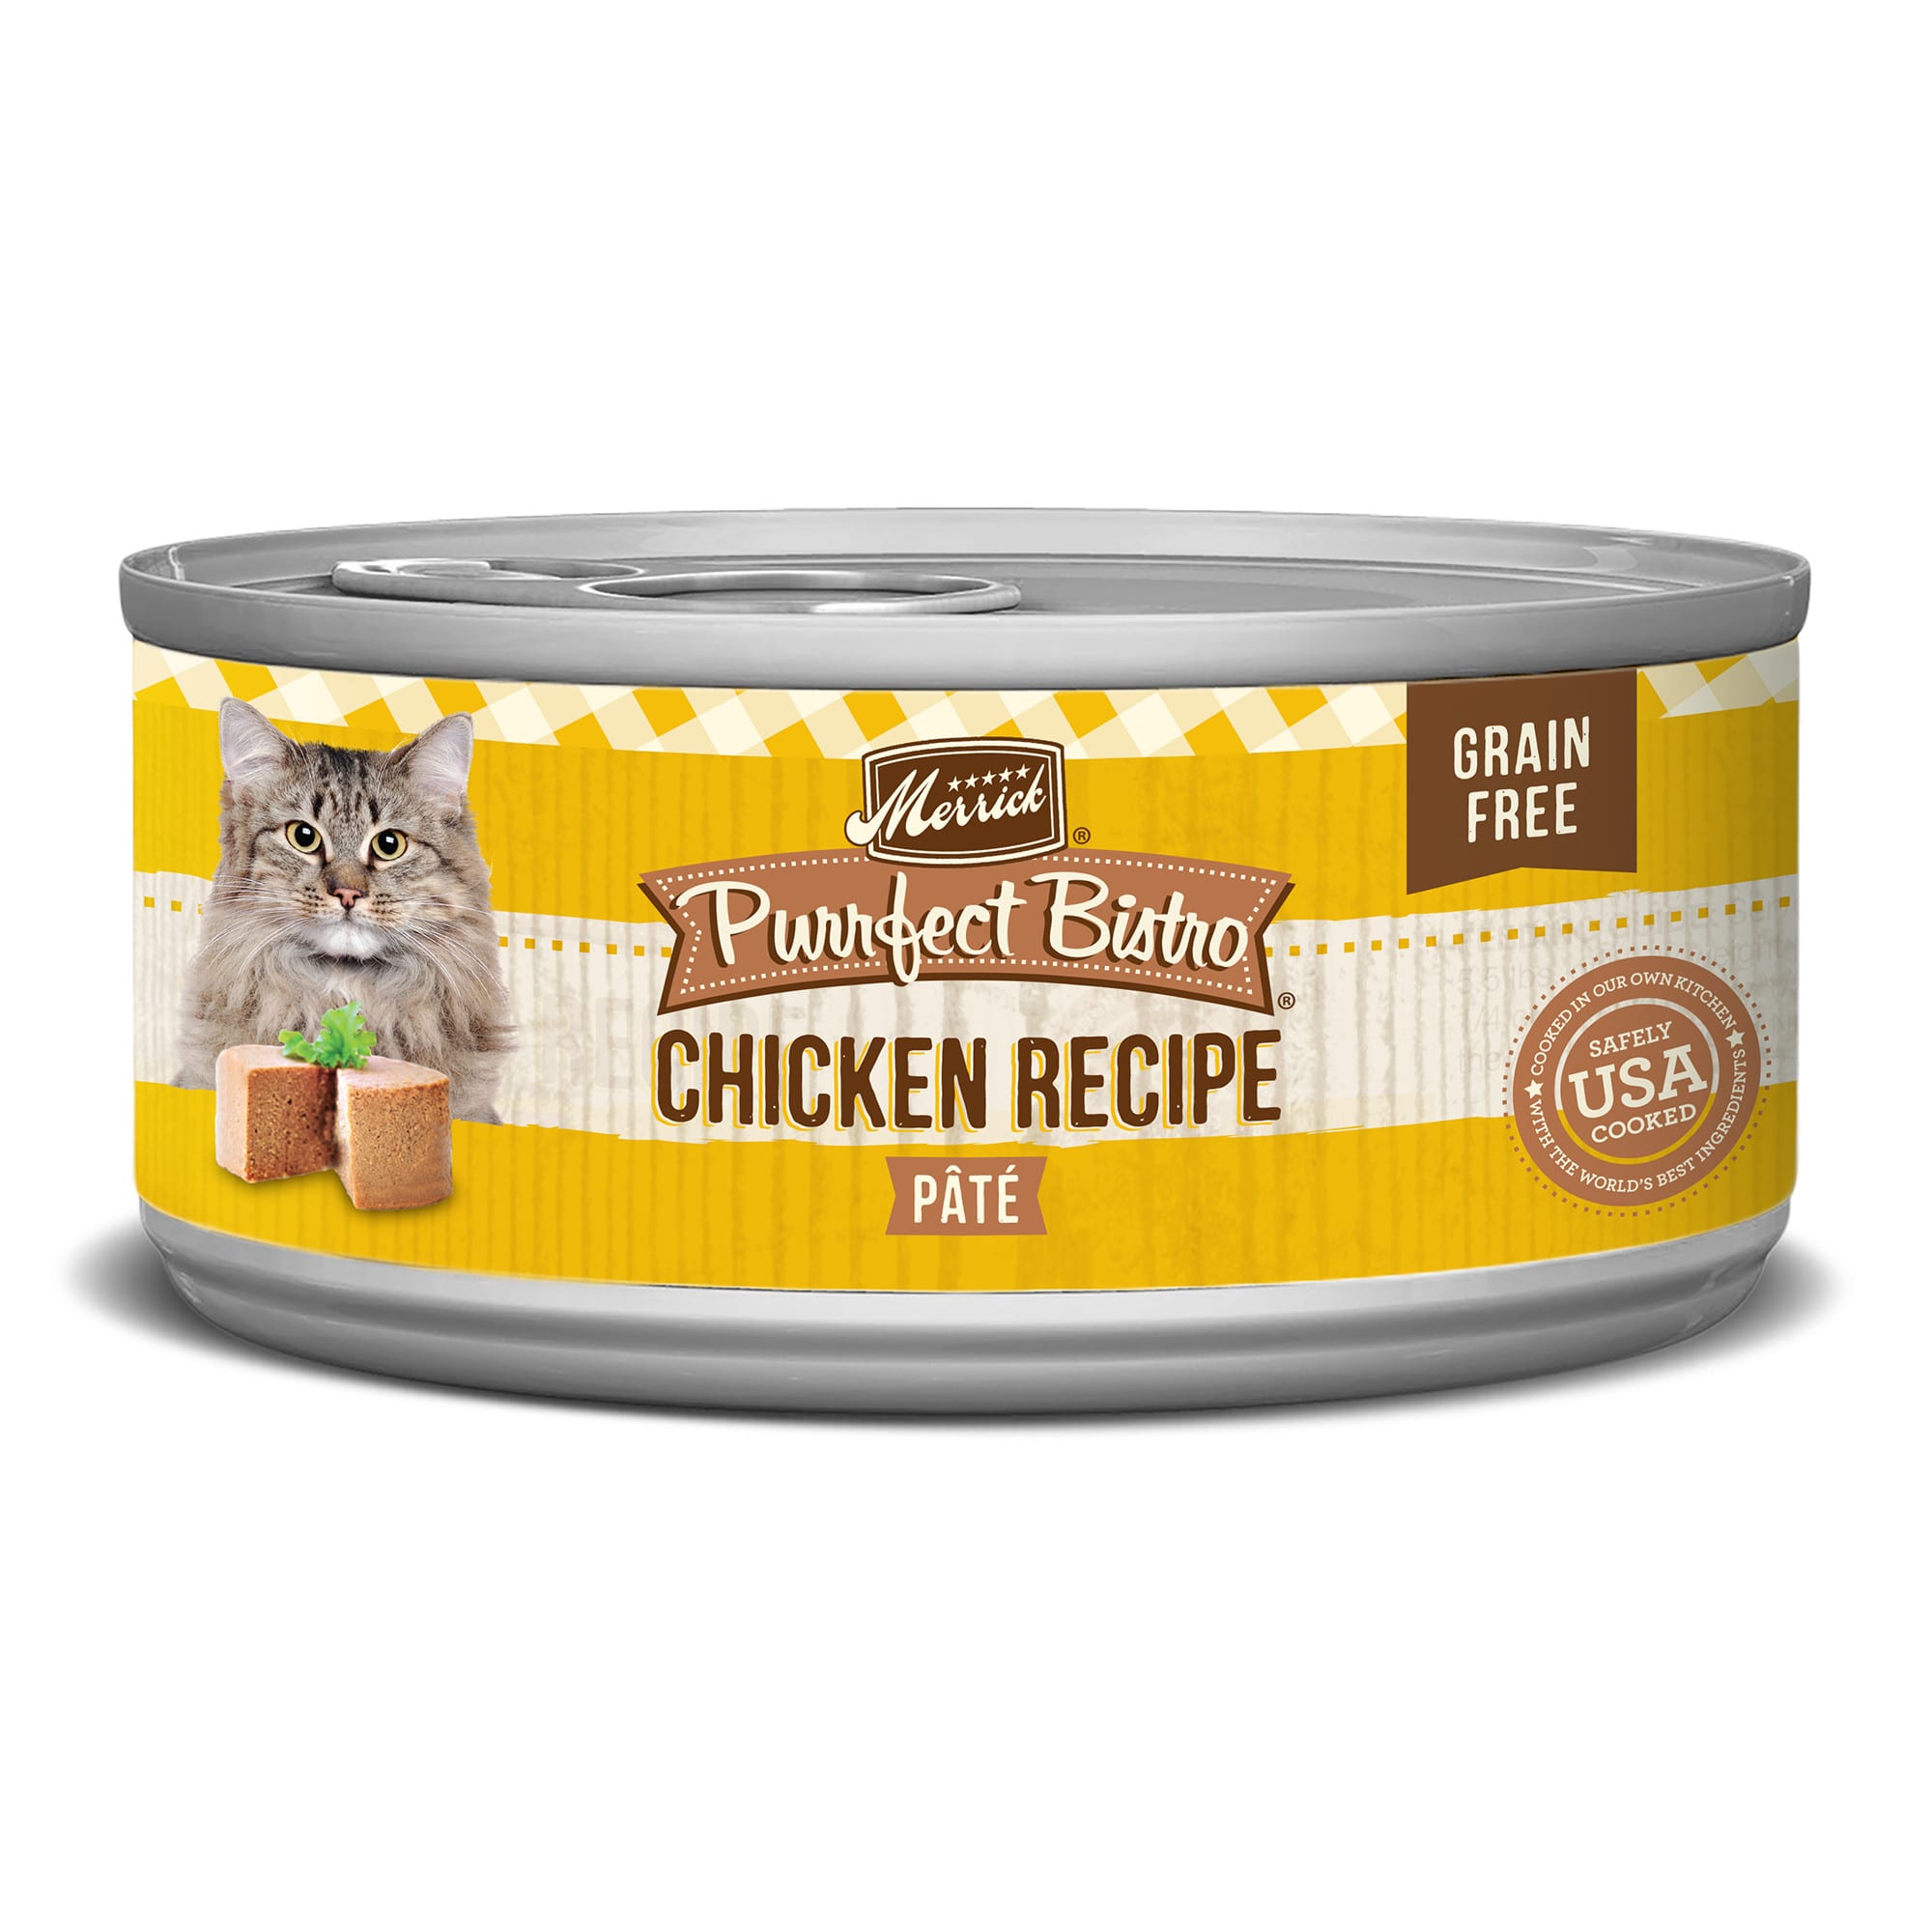 Merrick Purrfect Bistro Grain Free Chicken Pate Wet Cat Food, 5.5 oz